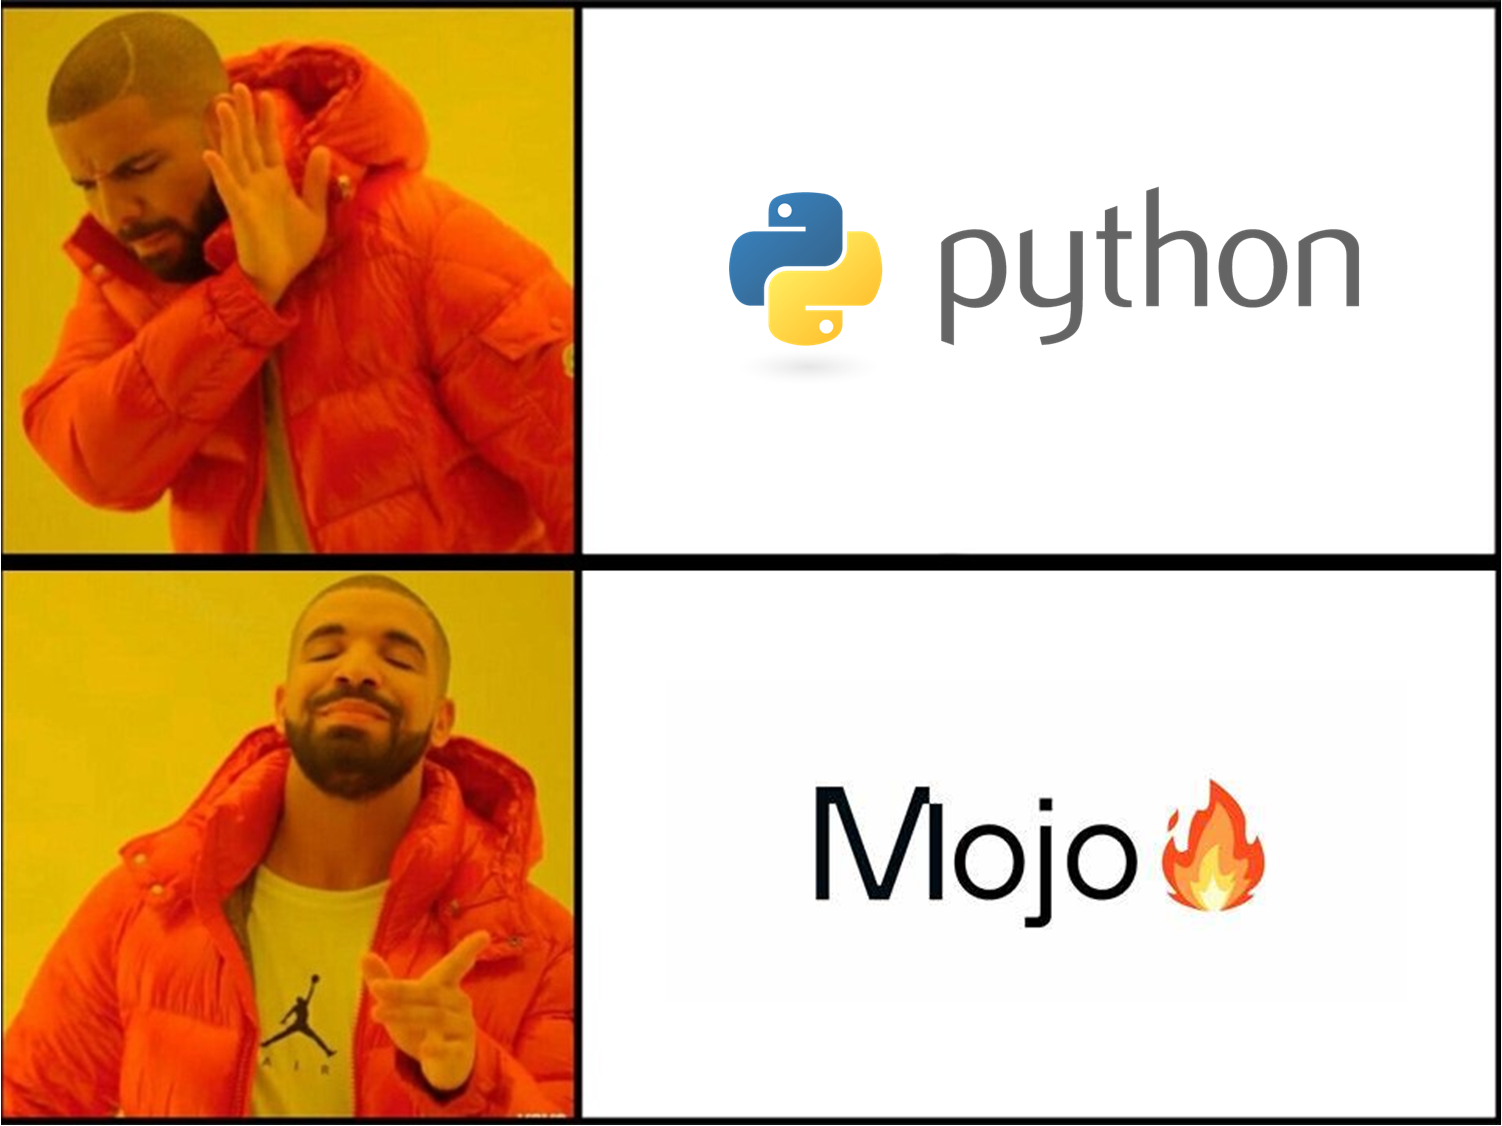 Drake: Python vs. Mojo